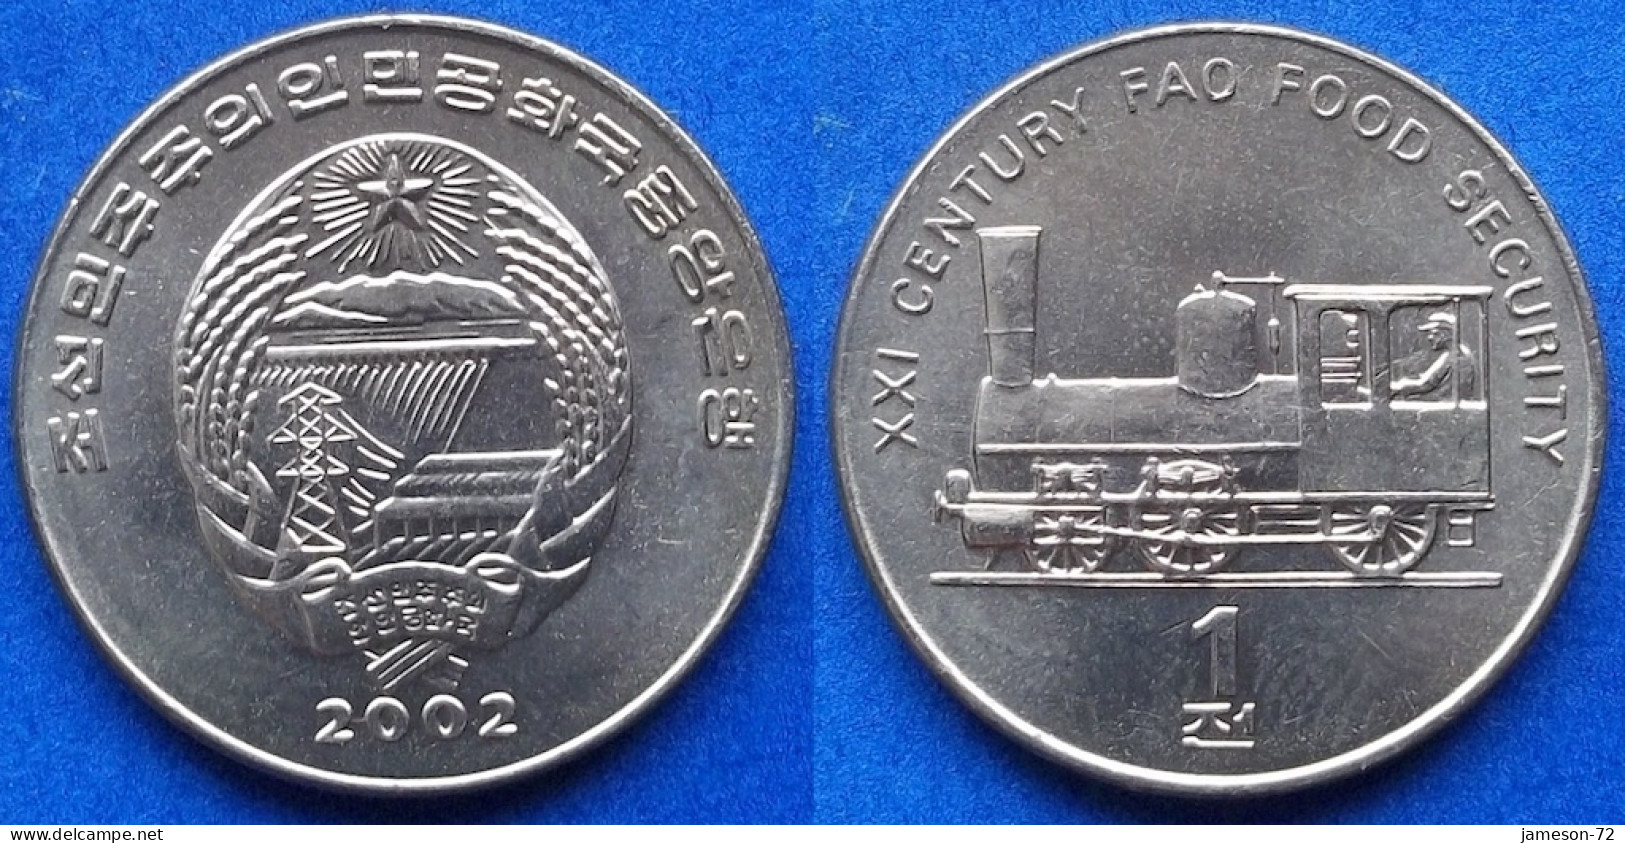 NORTH KOREA - 1 Chon 2002 "Antique Steam Locomotive" KM# 195 Democratic Peoples Republic (1948) - Edelweiss Coins - Corea Del Nord